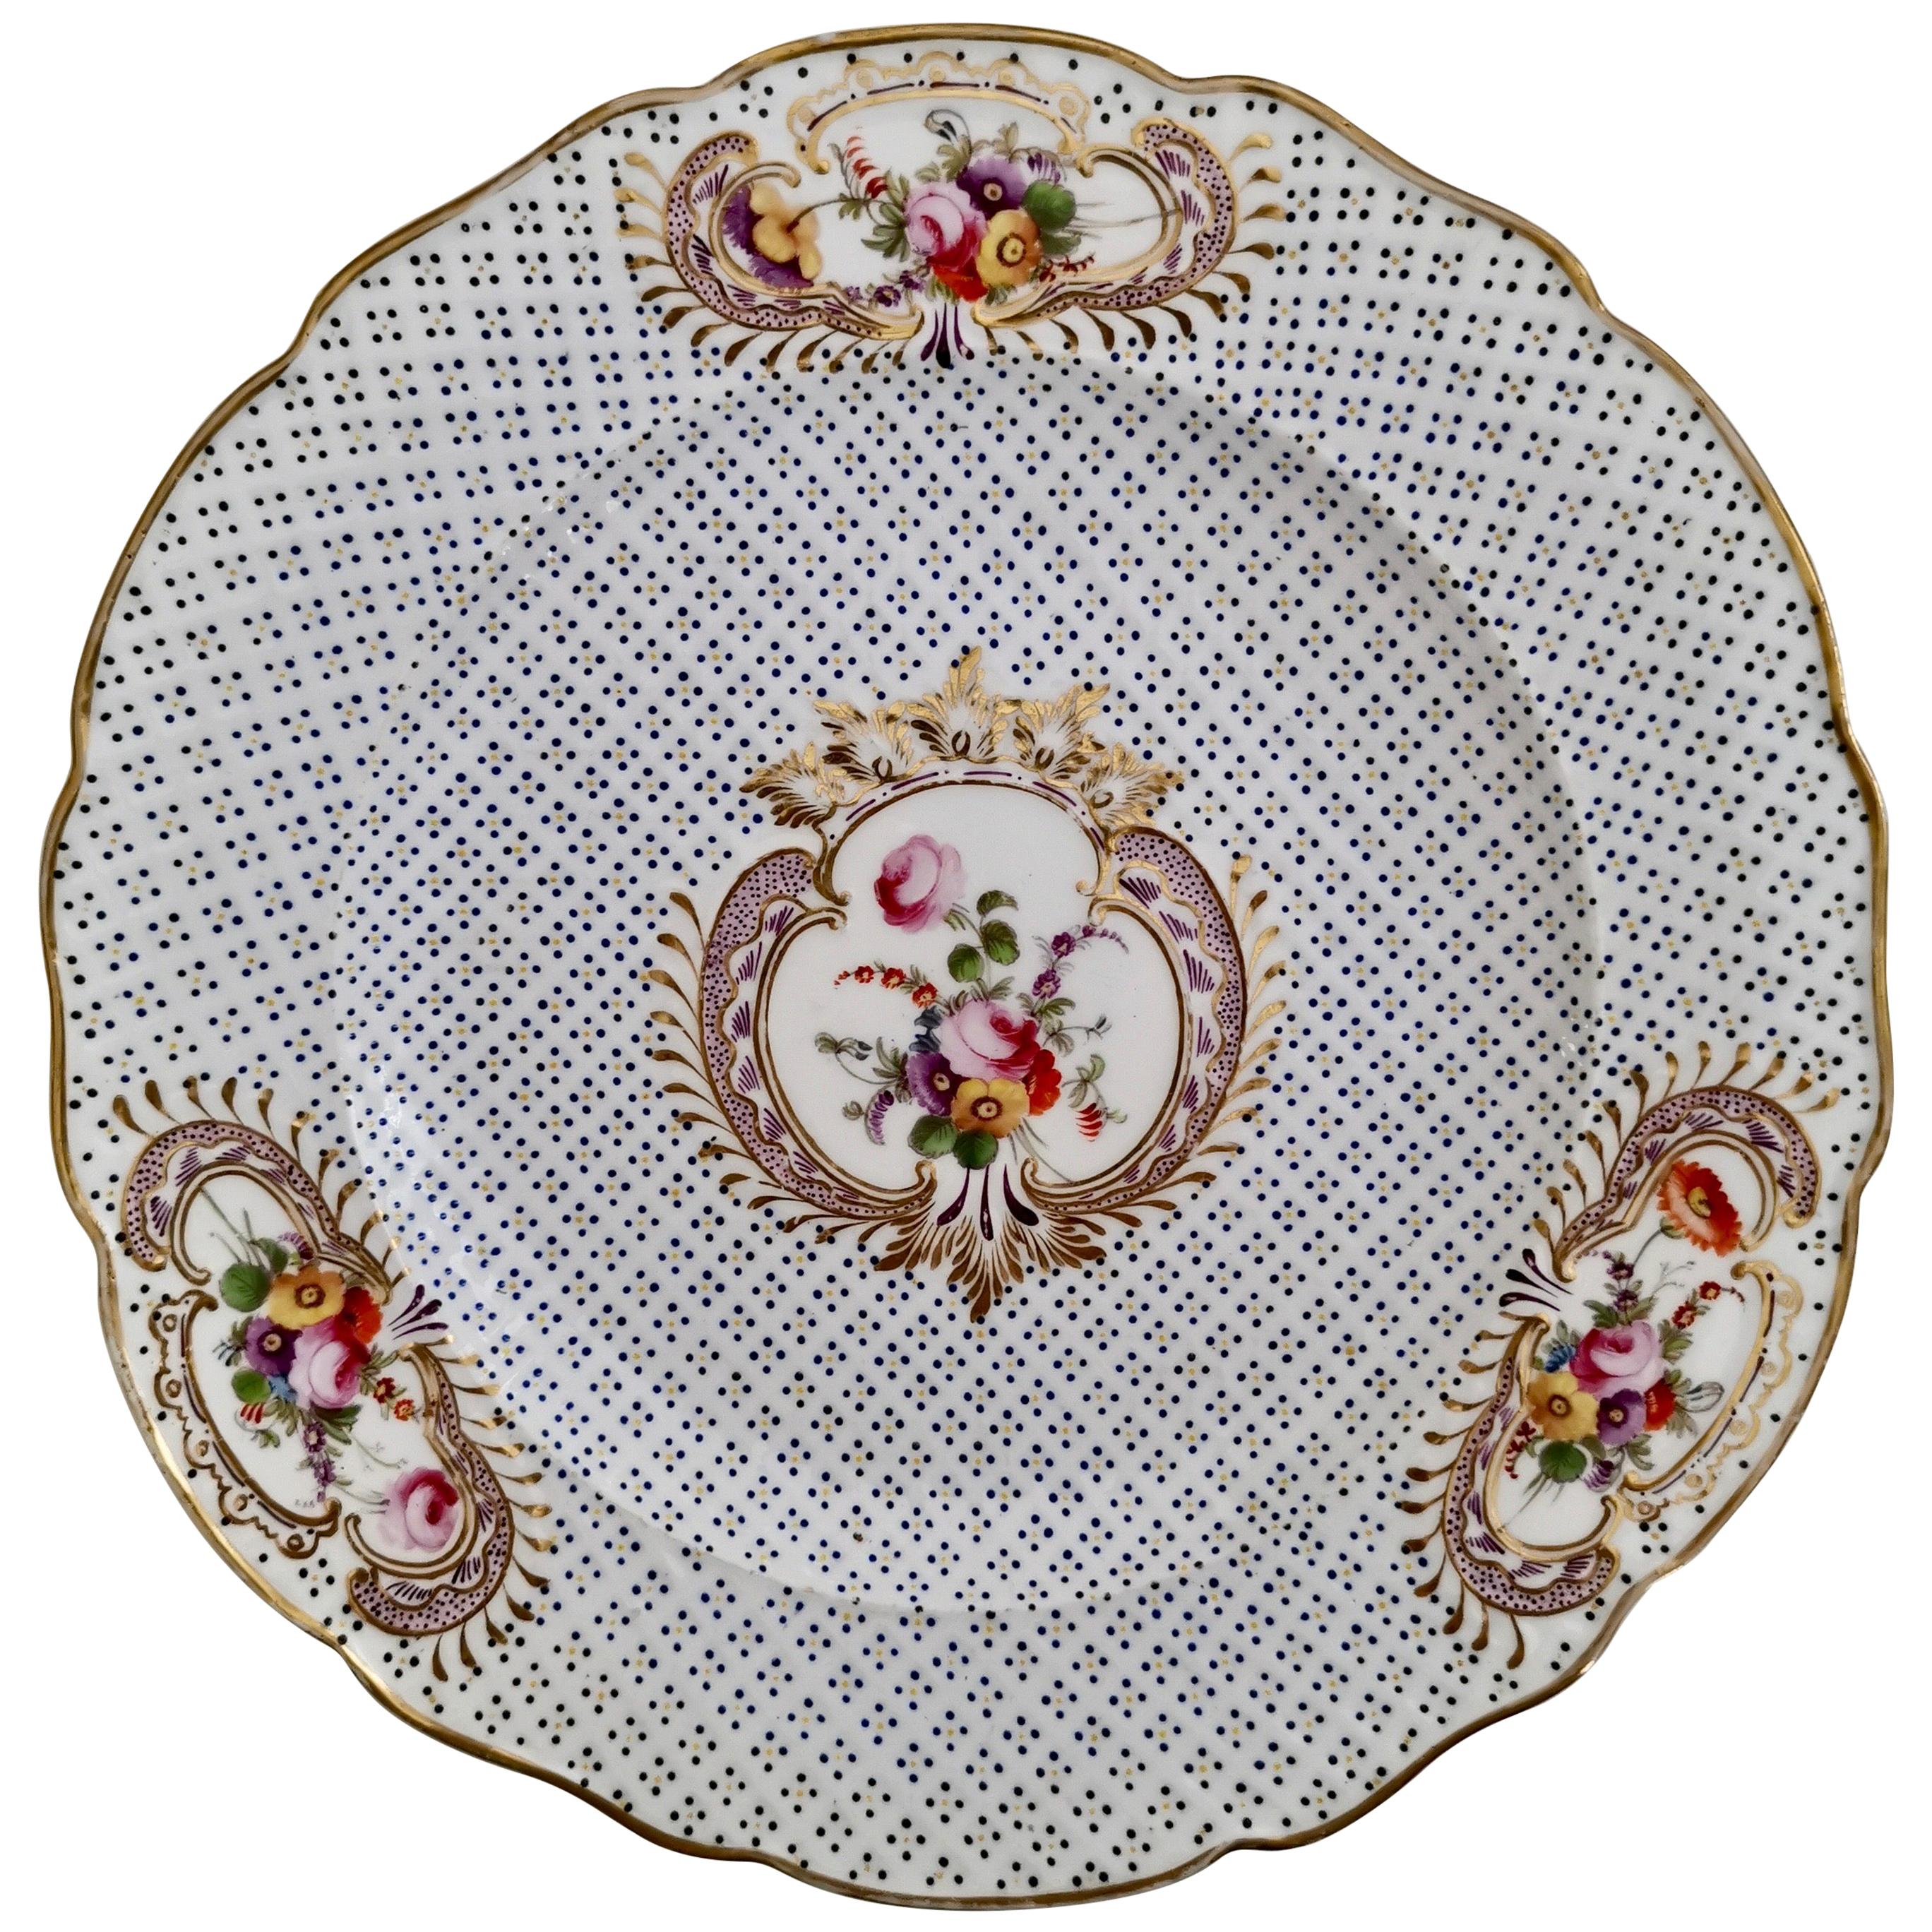 Coalport Porcelain Plate, Moulded Surface, White, Blue, Flowers, Regency ca 1820